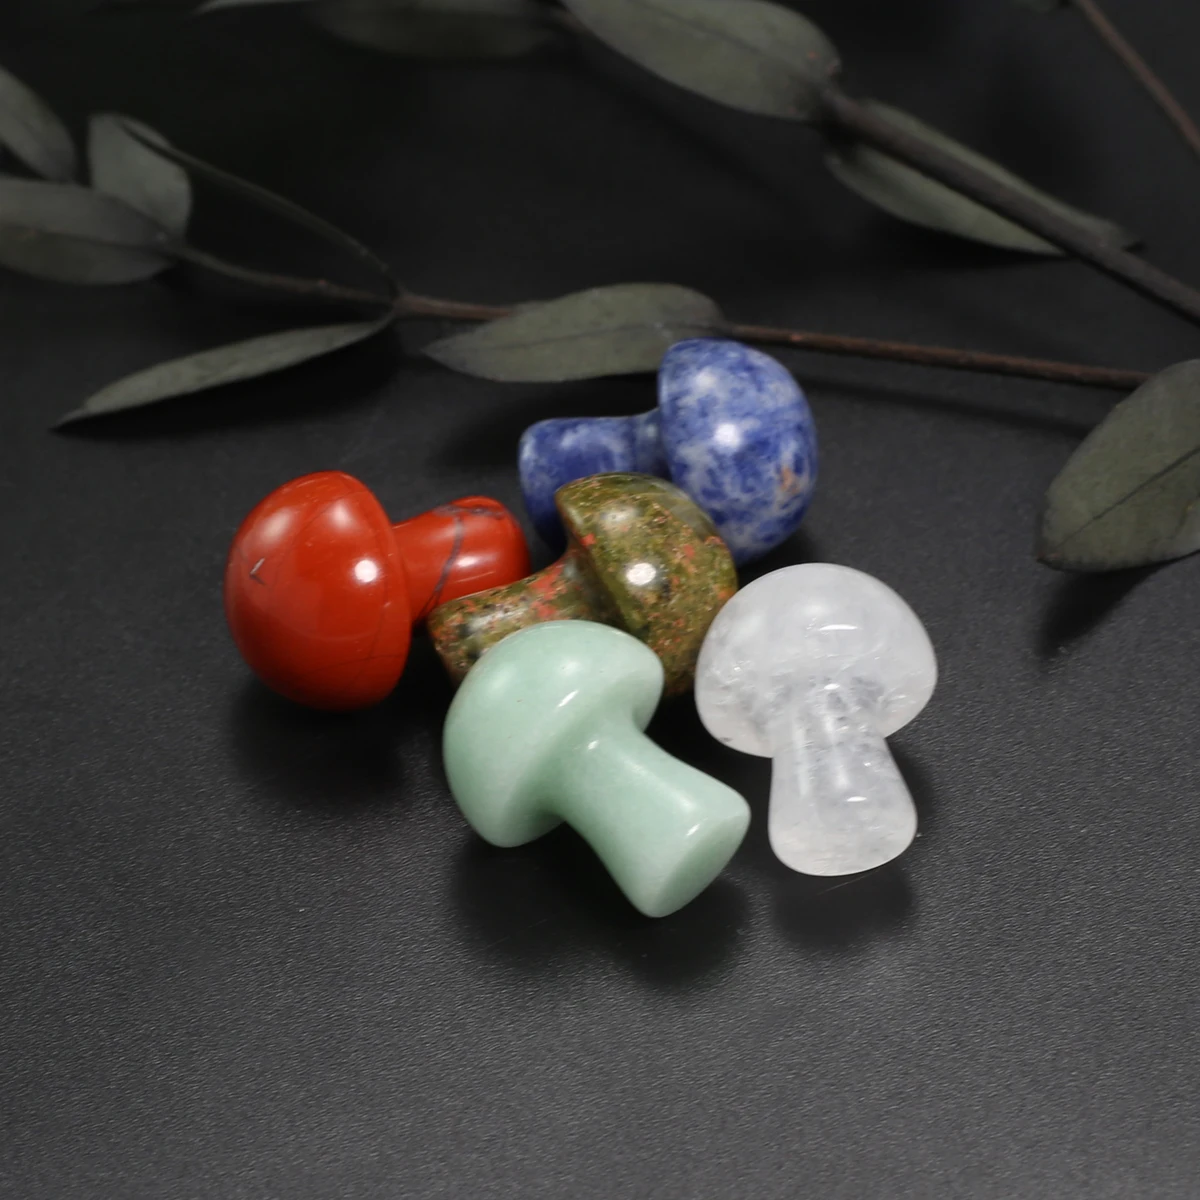 

5 PCS Natural Semi Precious Stone Mushroom Shaped Bead Ornaments, Spiritual Healing, Home Decoration, DIY Jewelry Making Gifts